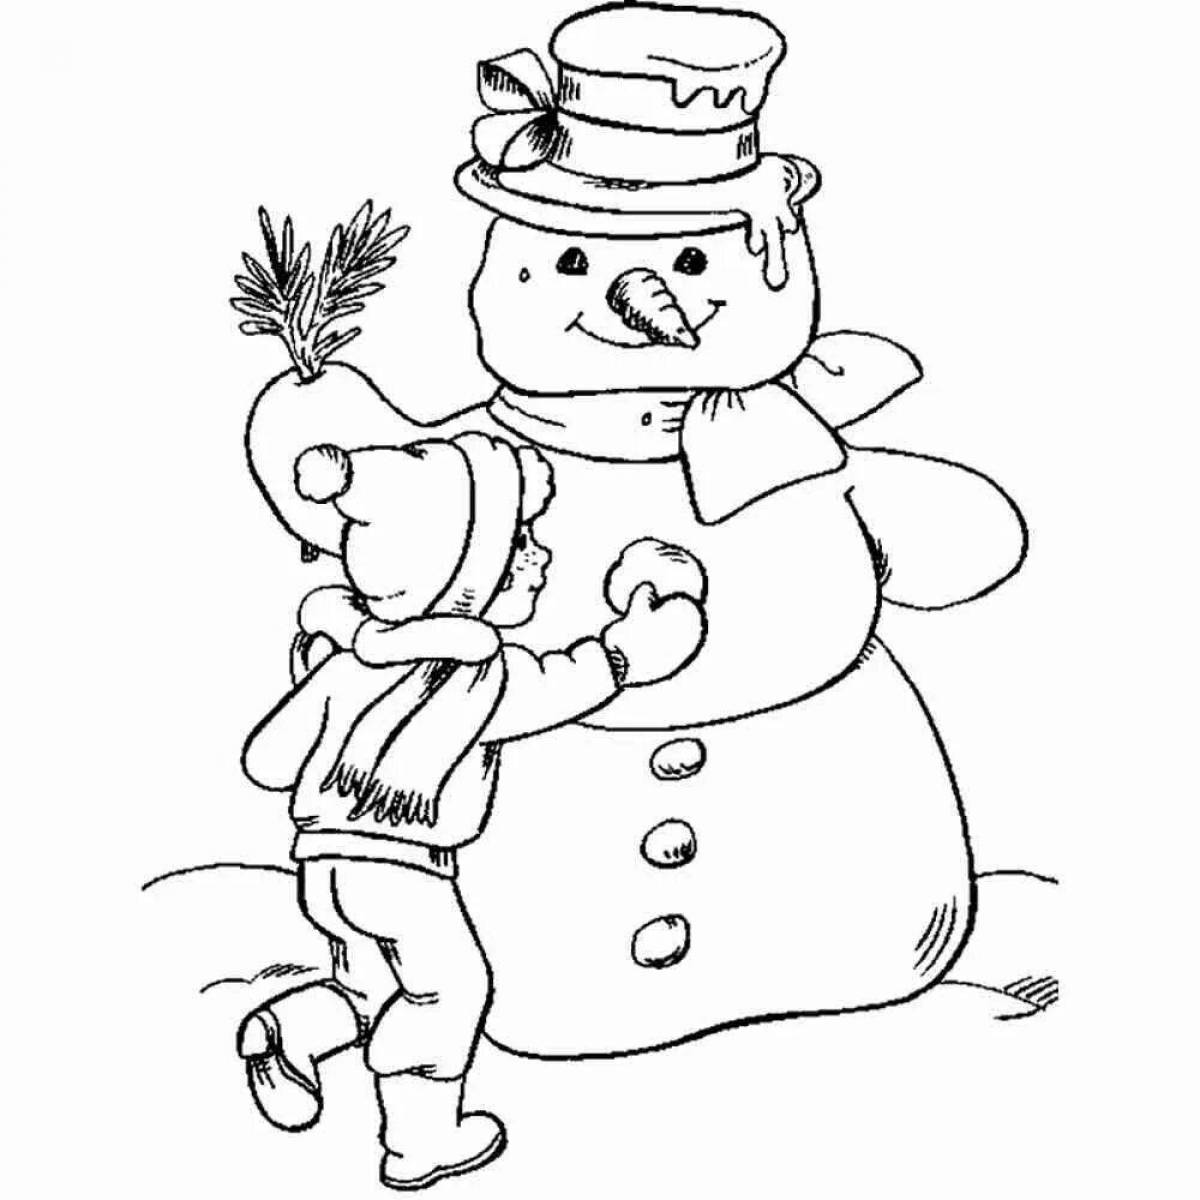 Playful children's coloring snowman